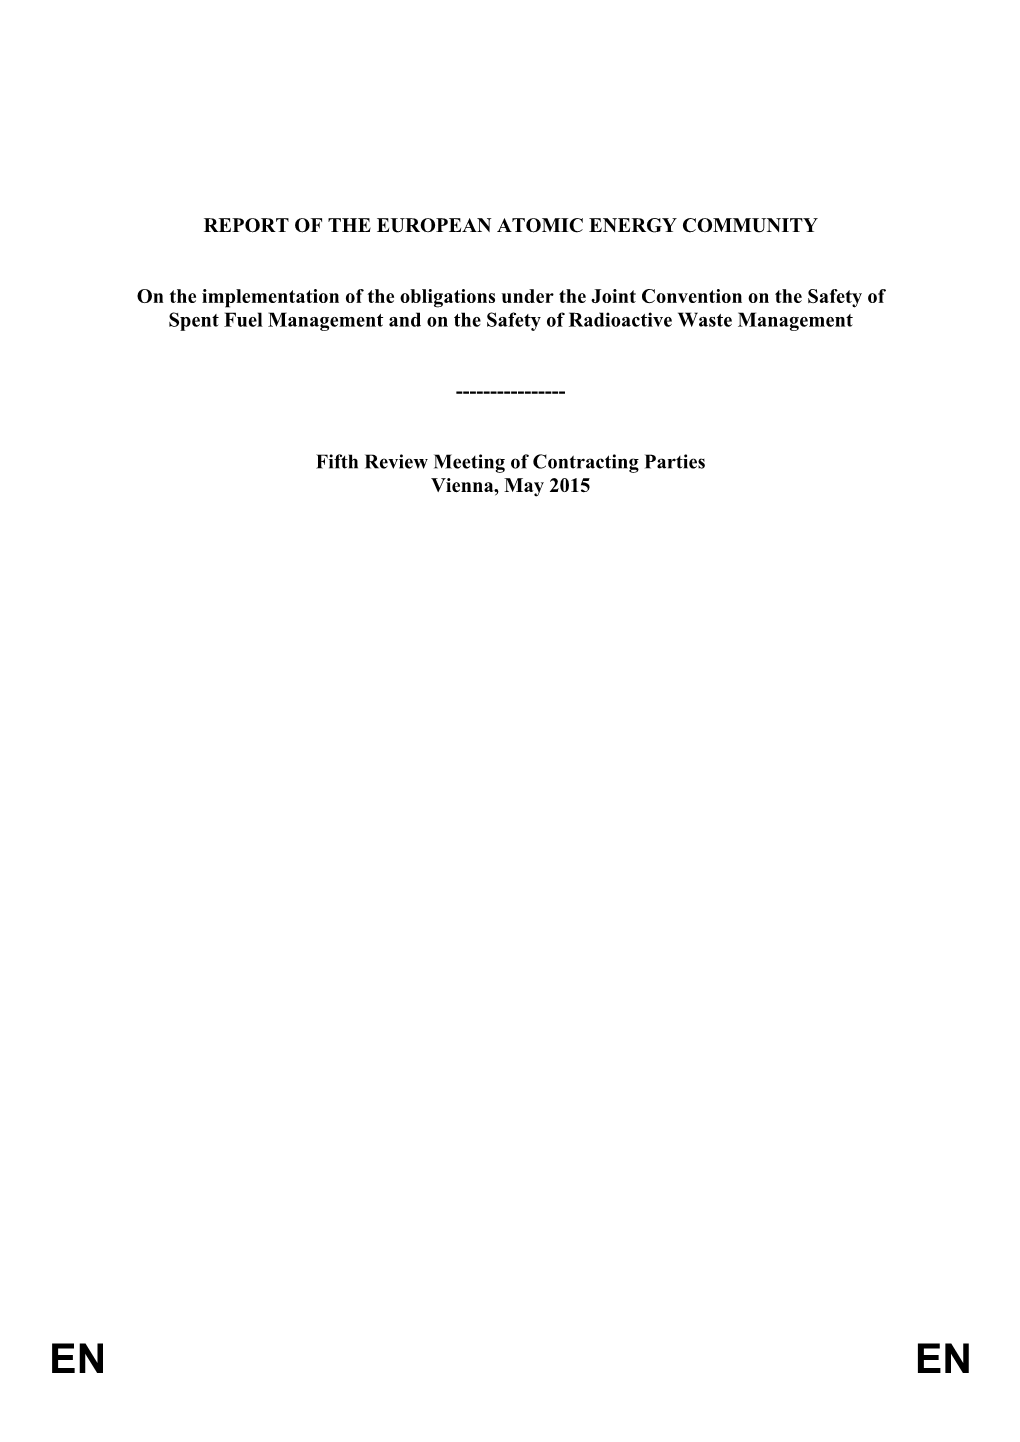 Report of the European Atomic Energy Community